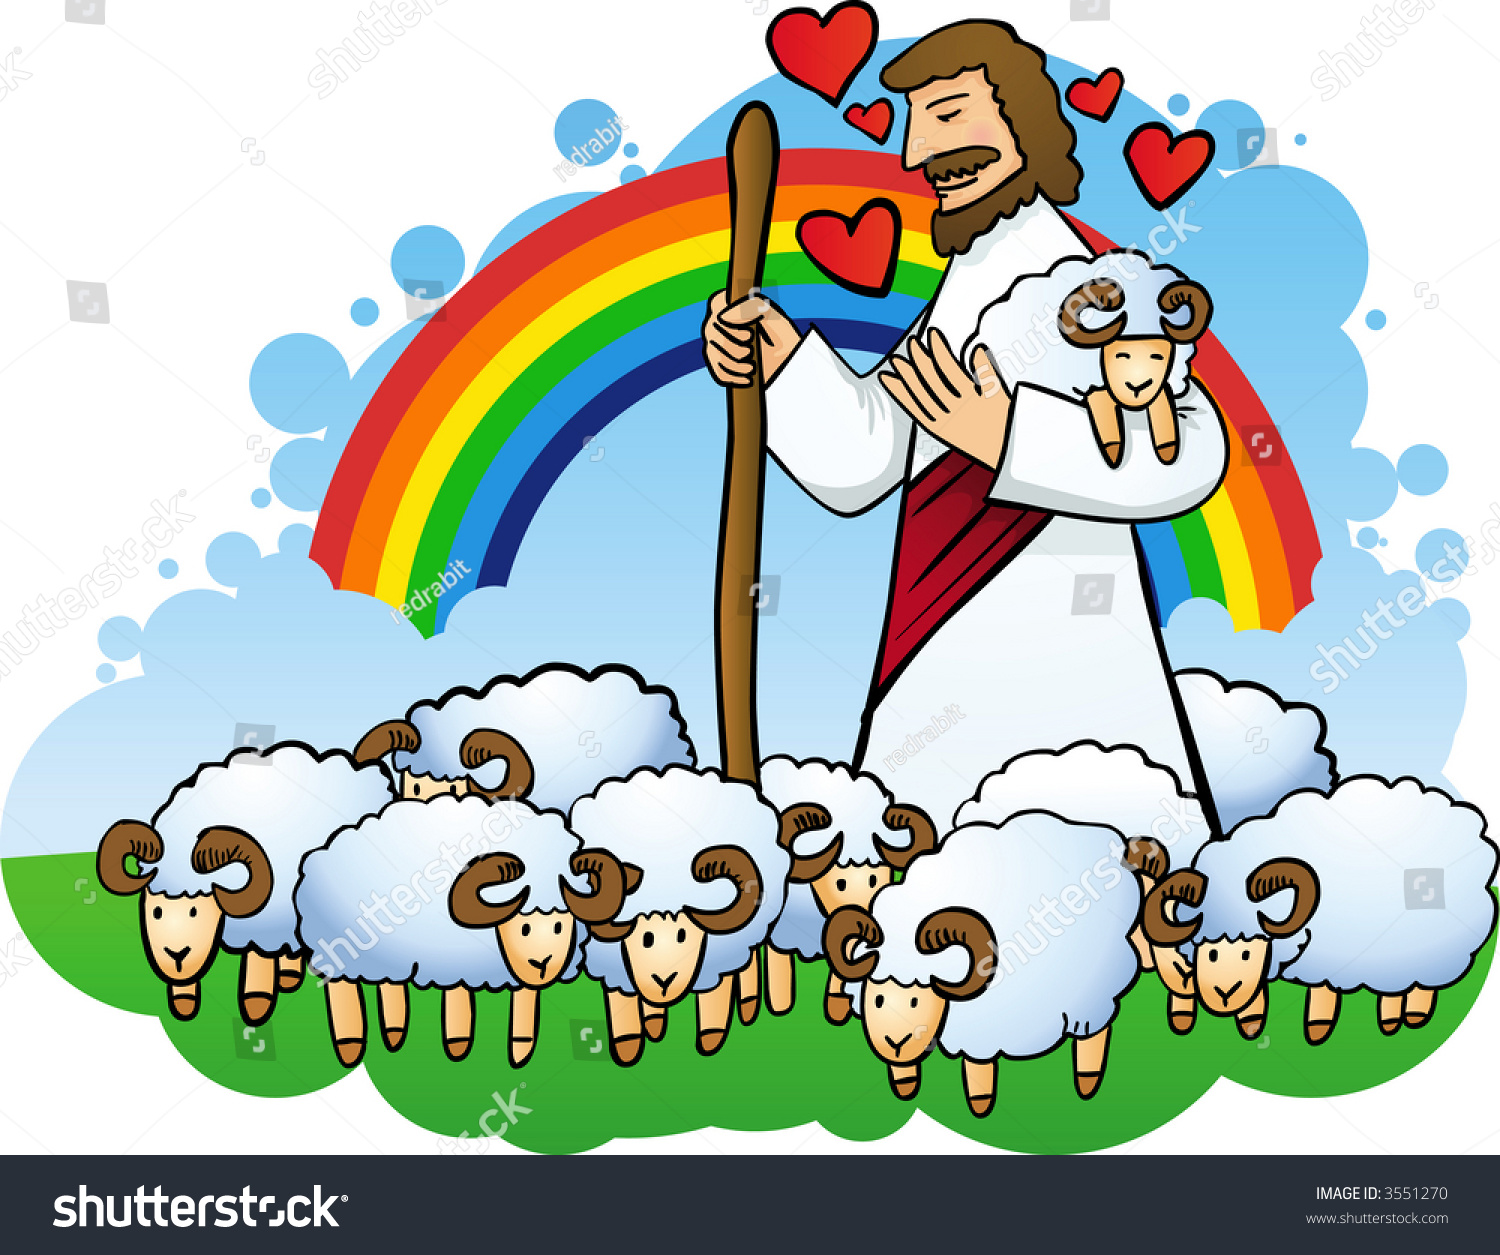 clipart jesus good shepherd - photo #27